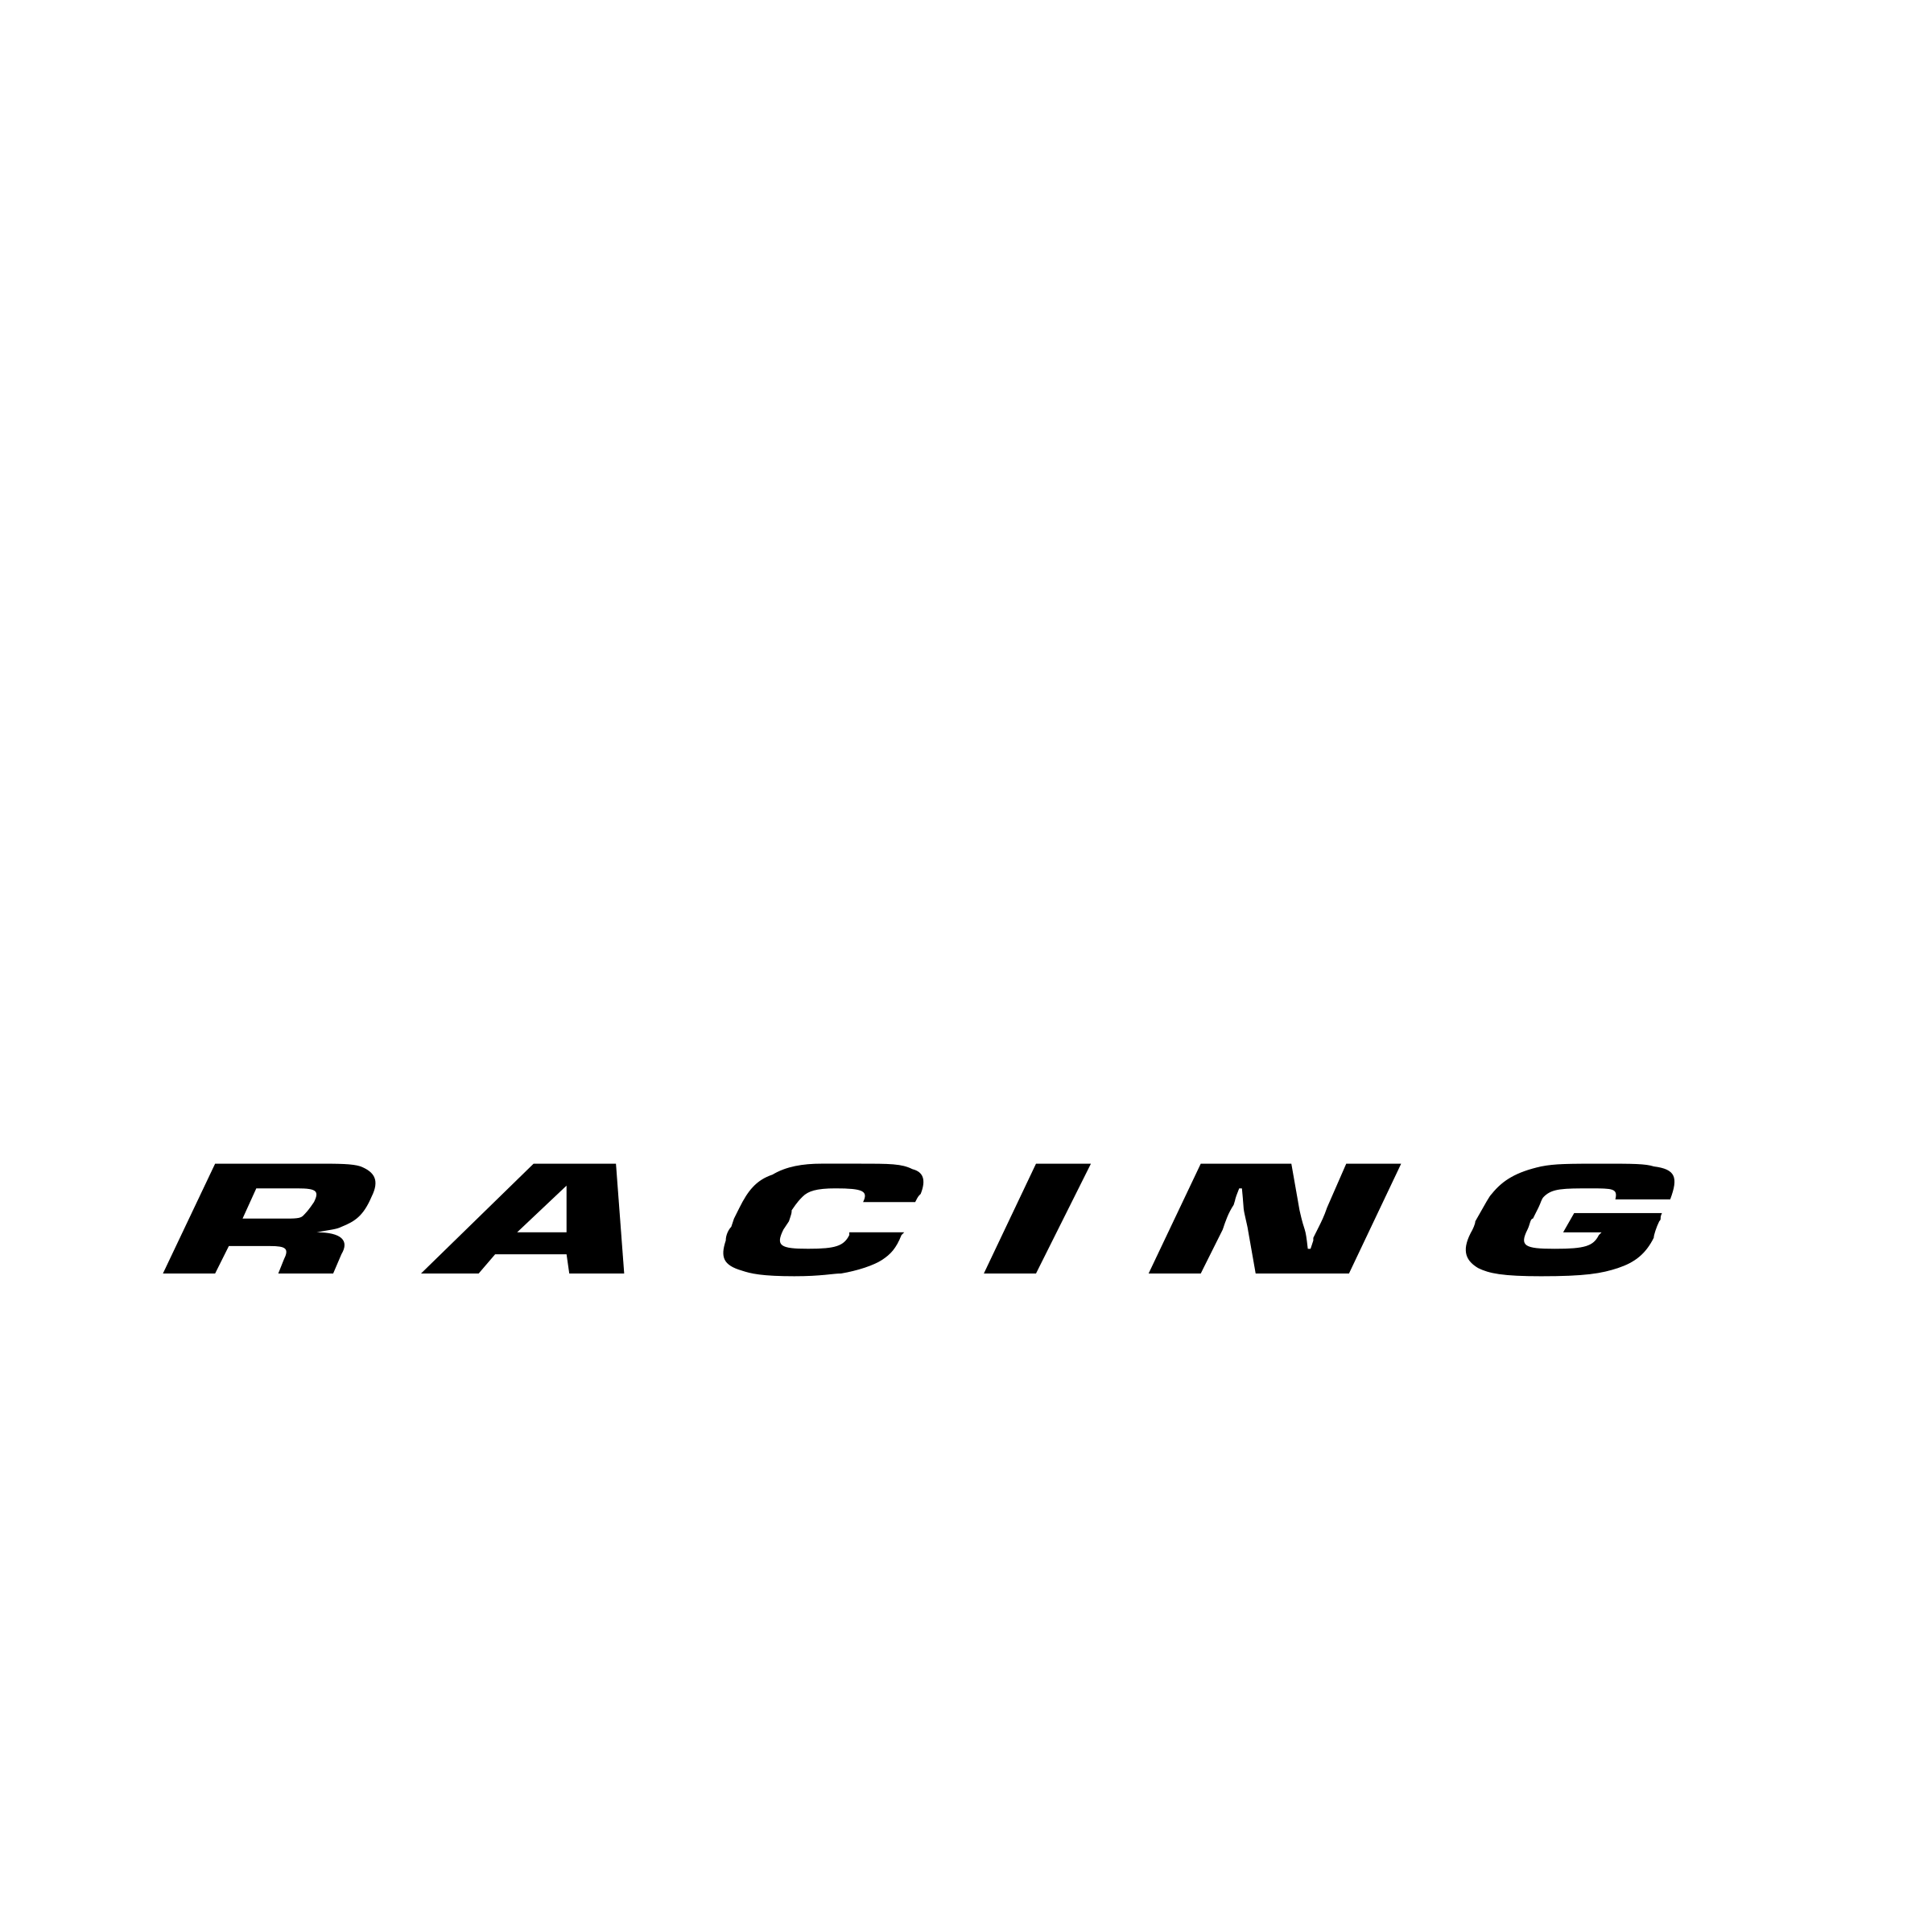 KTM Racing Logo - KTM Racing Logo PNG Transparent & SVG Vector - Freebie Supply